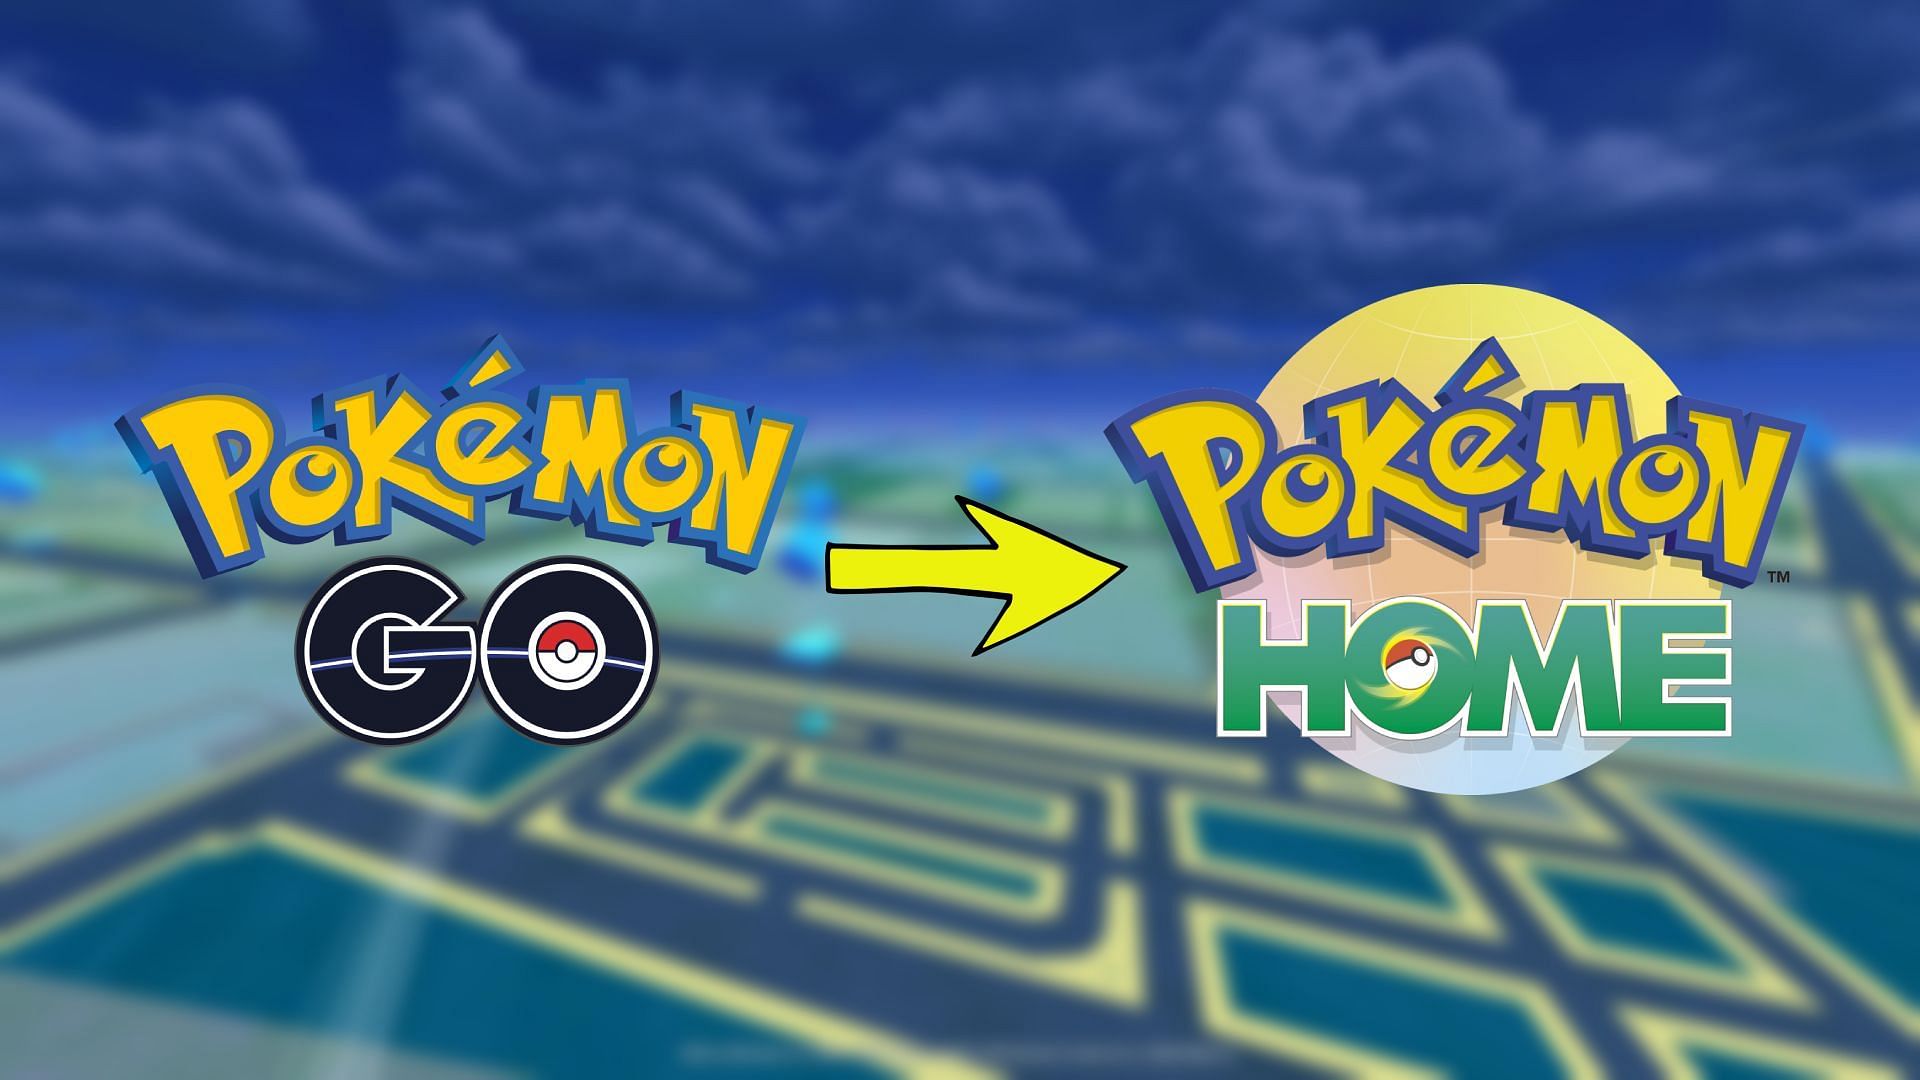 Transfer pocket monsters from Pokemon GO to Pokemon HOME (Image via Sportskeeda)